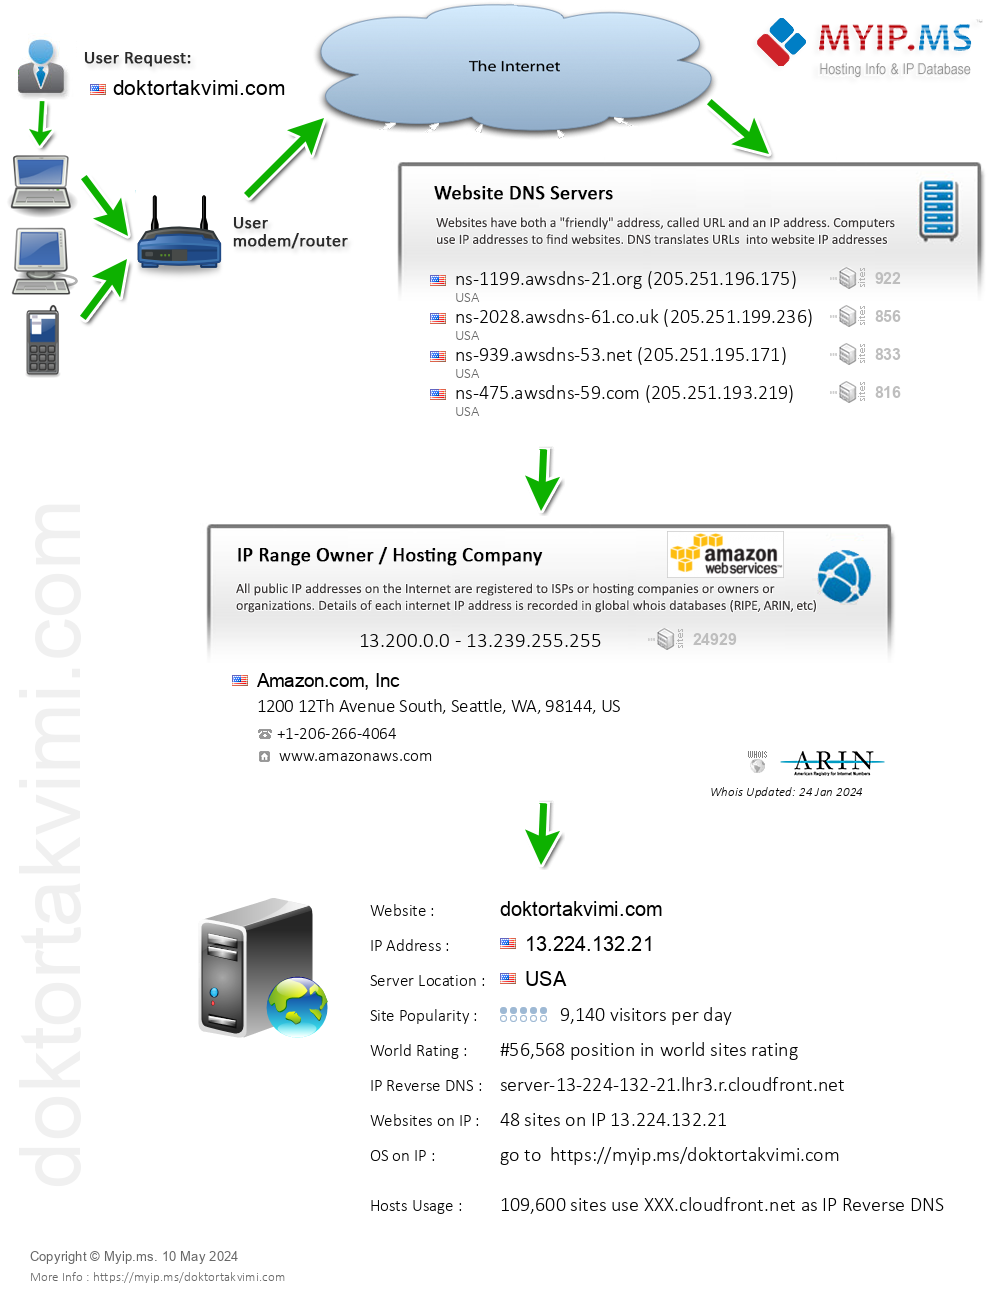 Doktortakvimi.com - Website Hosting Visual IP Diagram